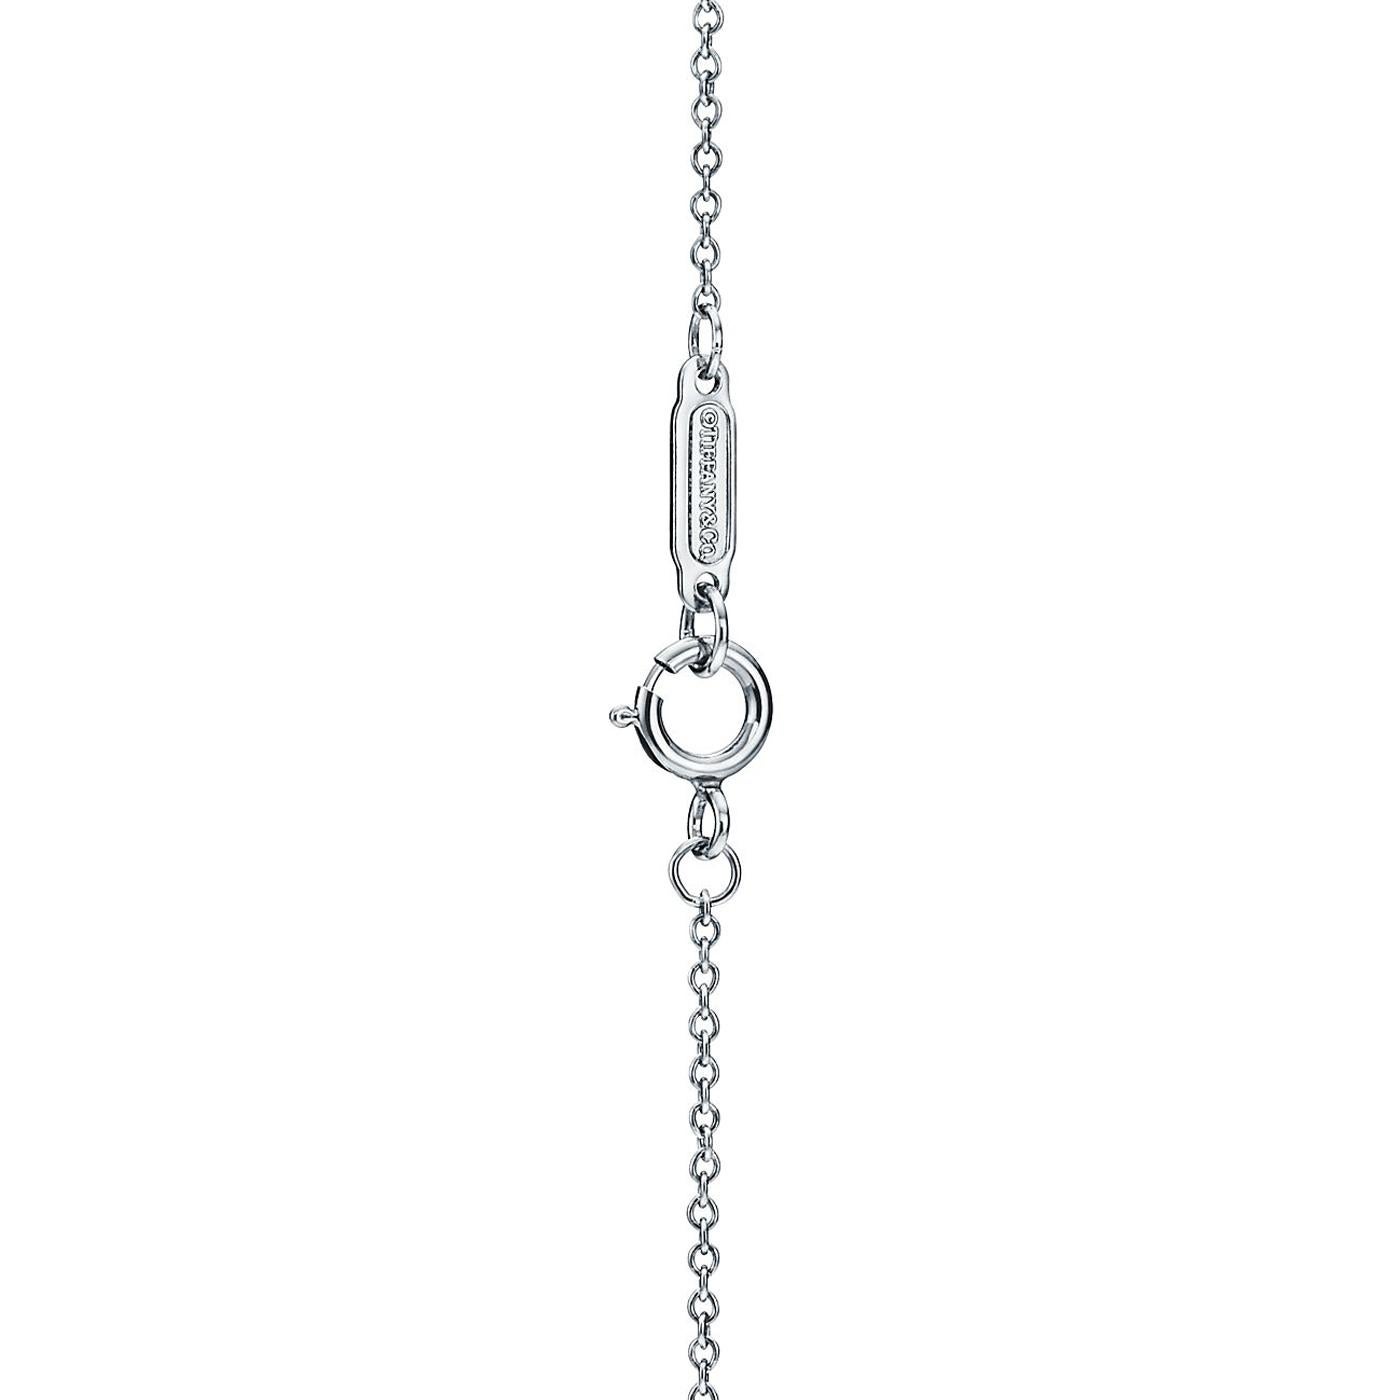 Modernist Tiffany & Co. Solitaire 0.50ct Round Brilliant Cut Diamond Pendant in Platinum